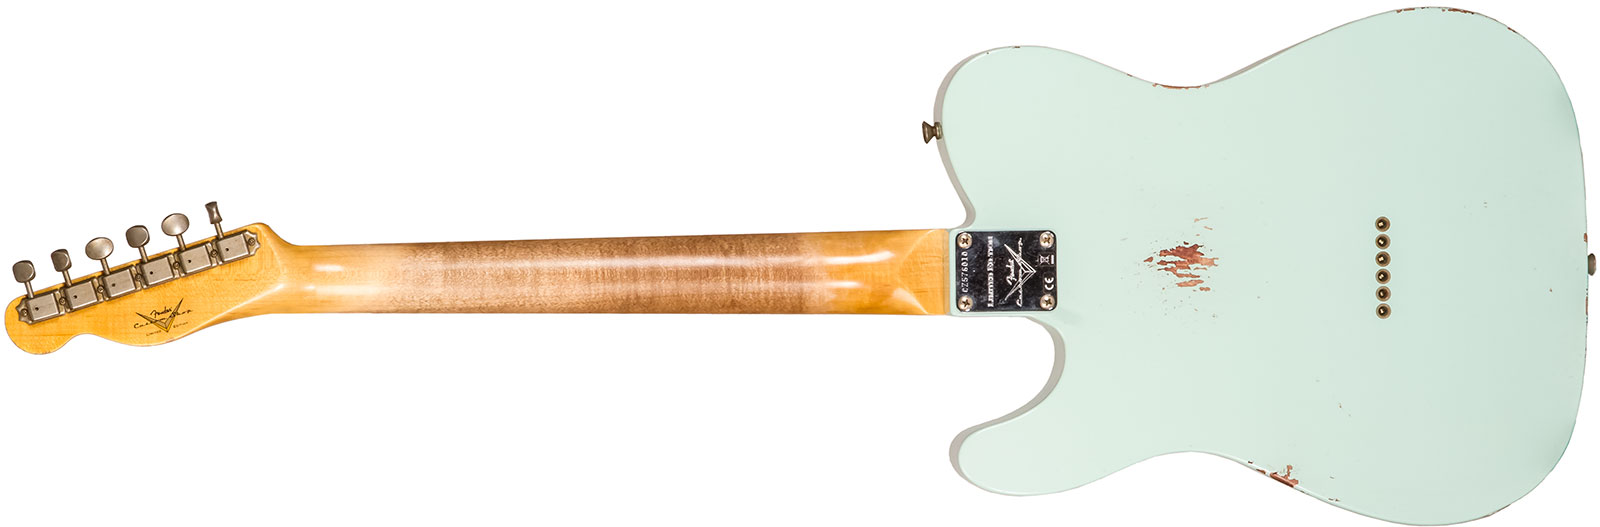 Fender Custom Shop Tele 1961 2s Ht Rw #cz576010 - Relic Aged Surf Green - Tel shape electric guitar - Variation 1